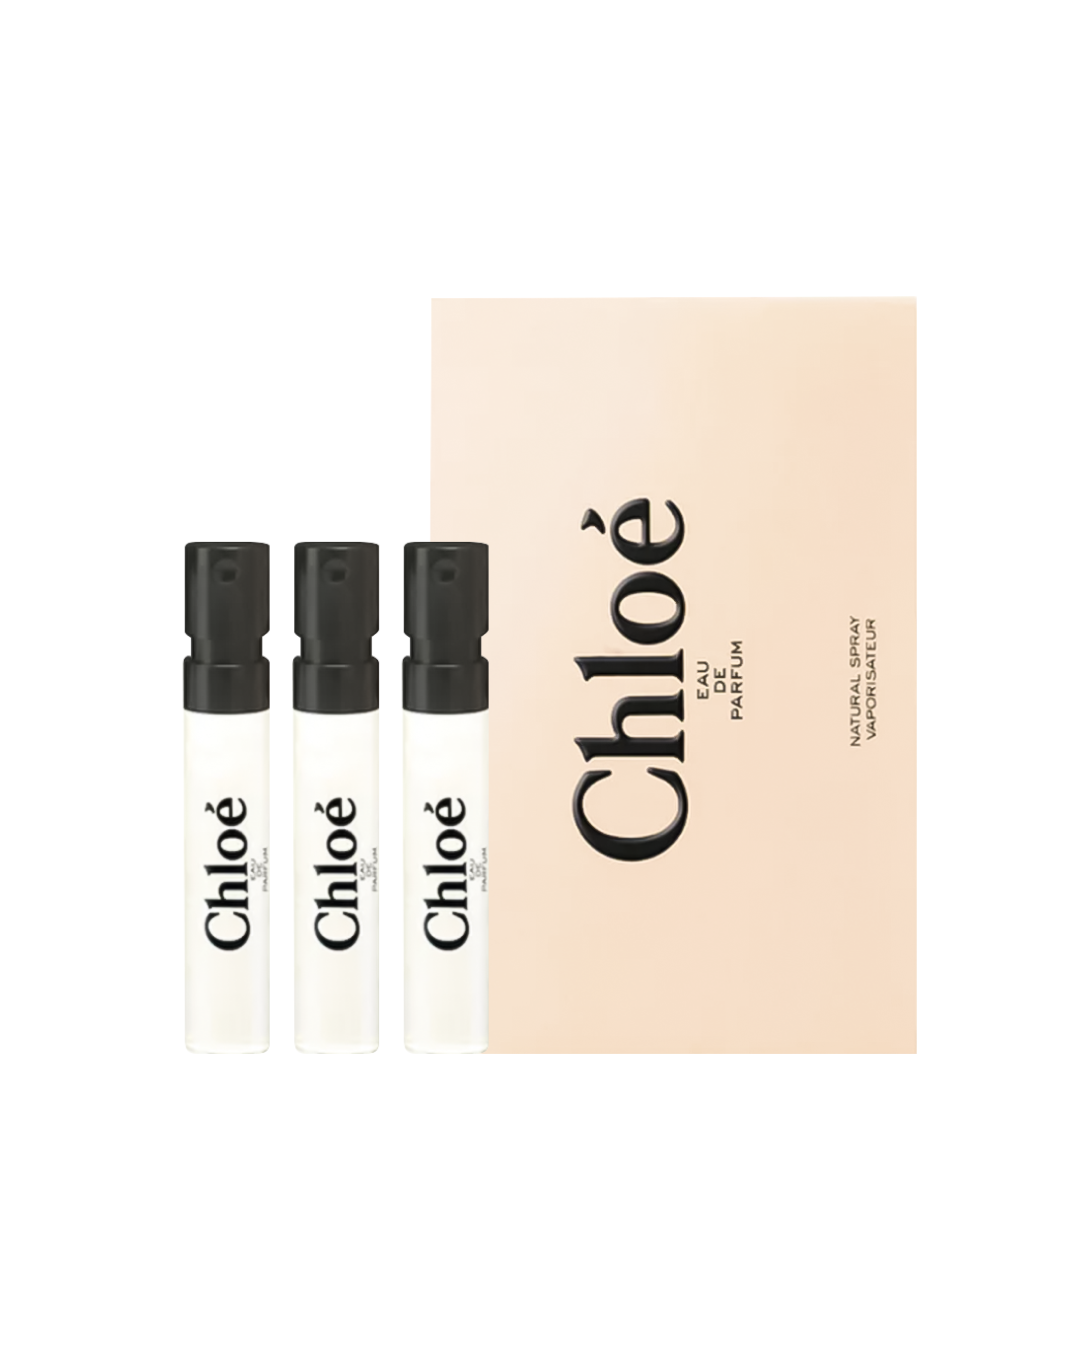 Chloe Chloe Eau de Parfum Travel Vial (1.2ml x 3) - Best Buy World Philippines